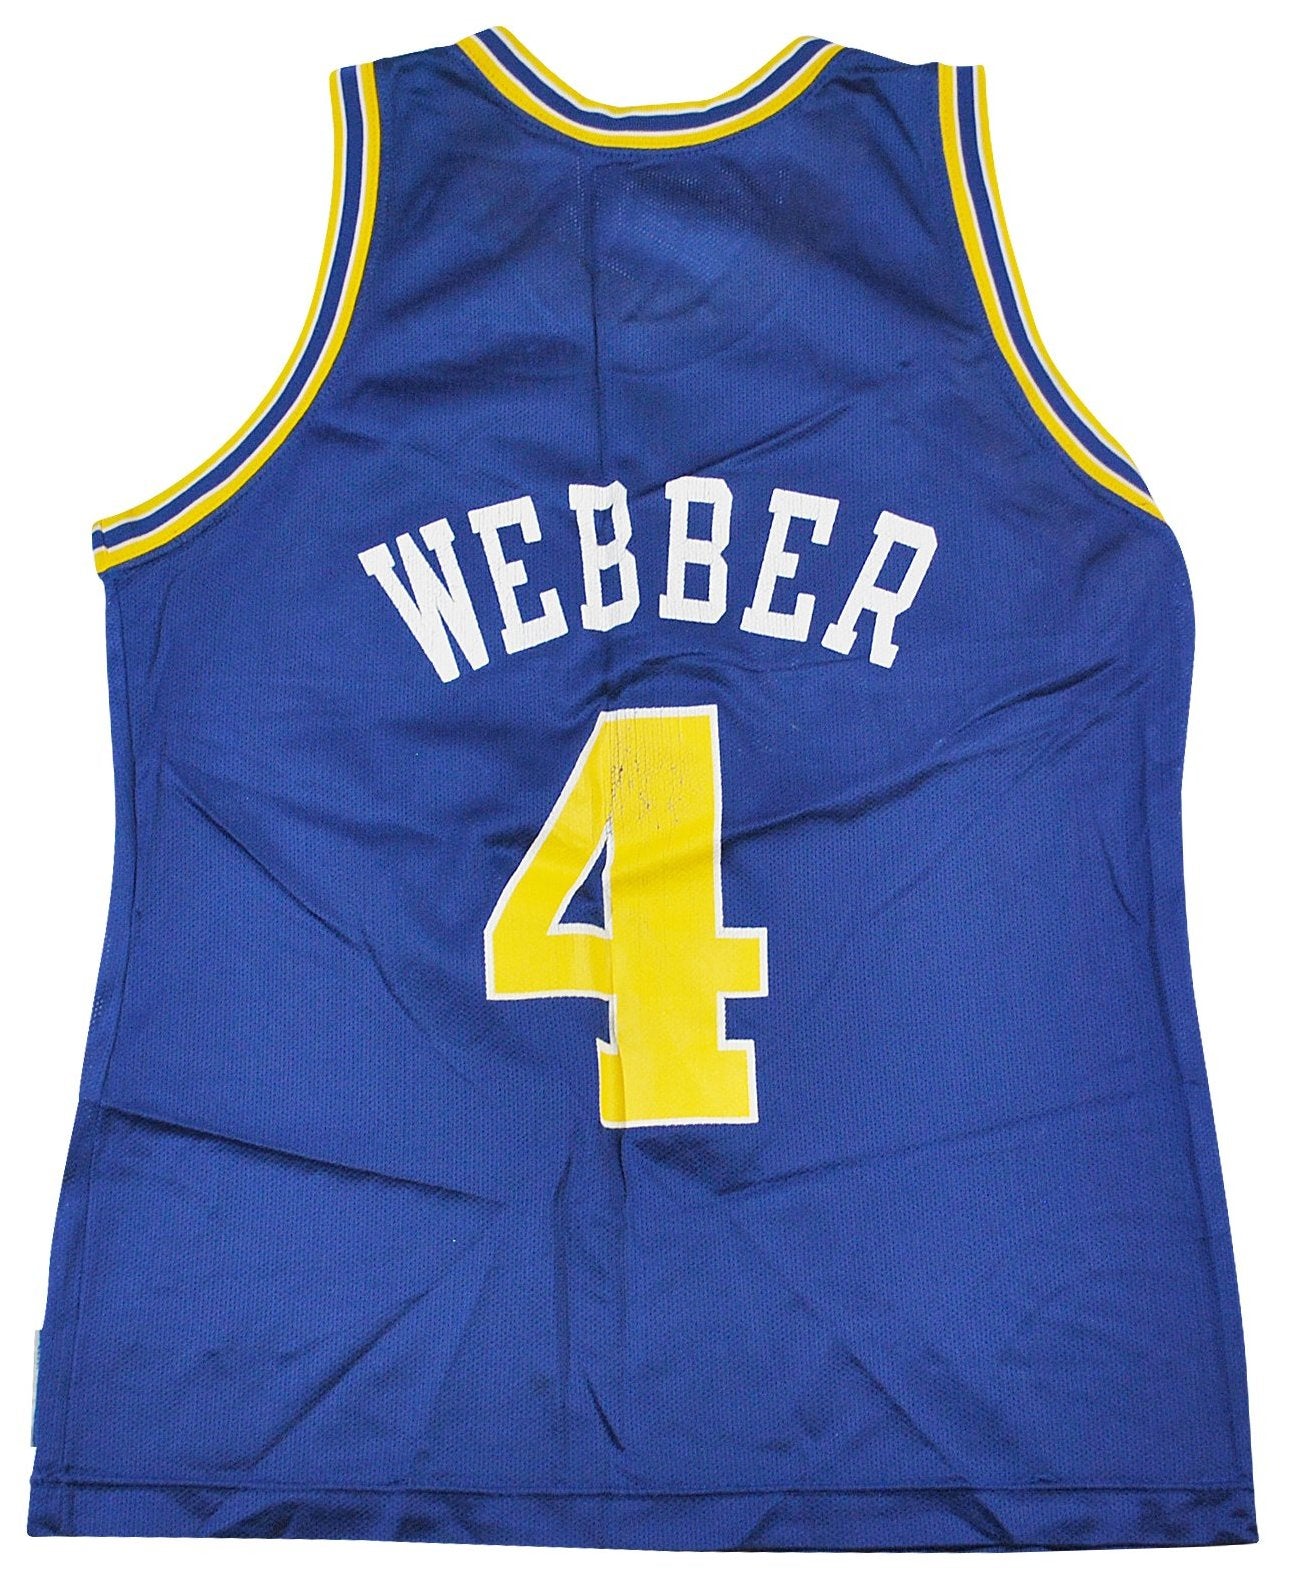 Vintage Champion Jersey - Chris Webber Golden State Warriors